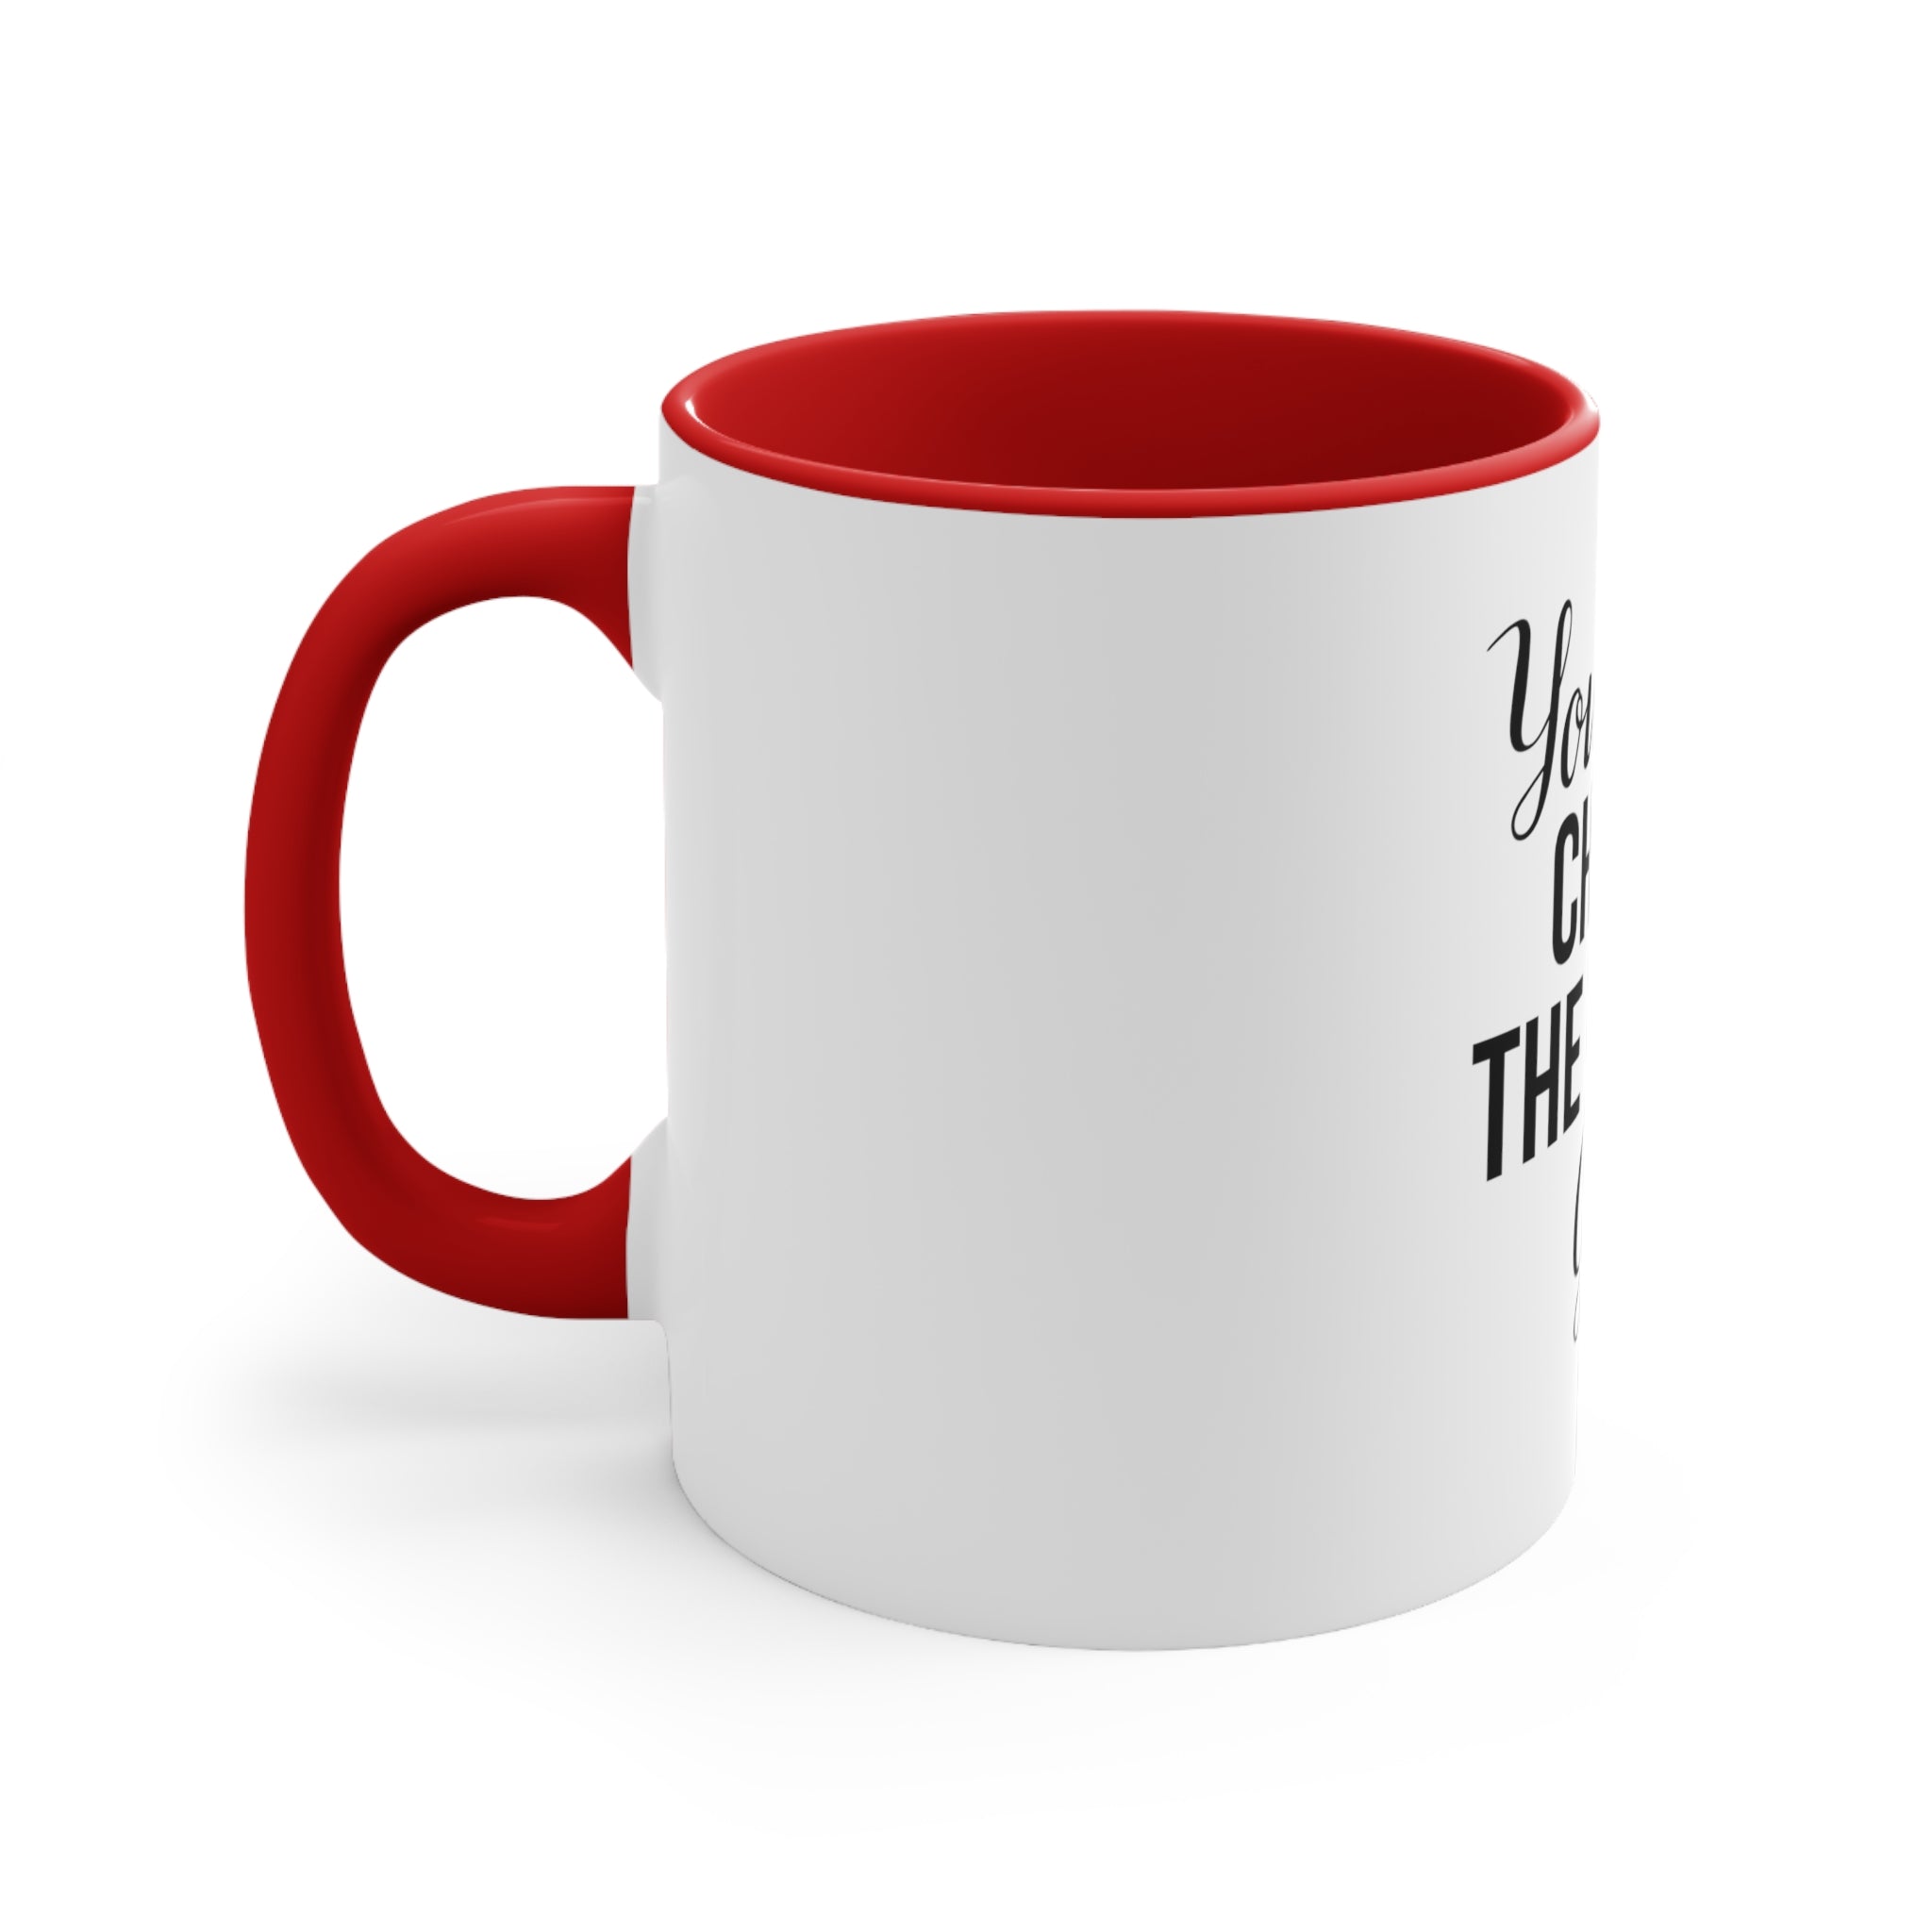 You Can Change The World Girl Accent Coffee Mug, 11oz